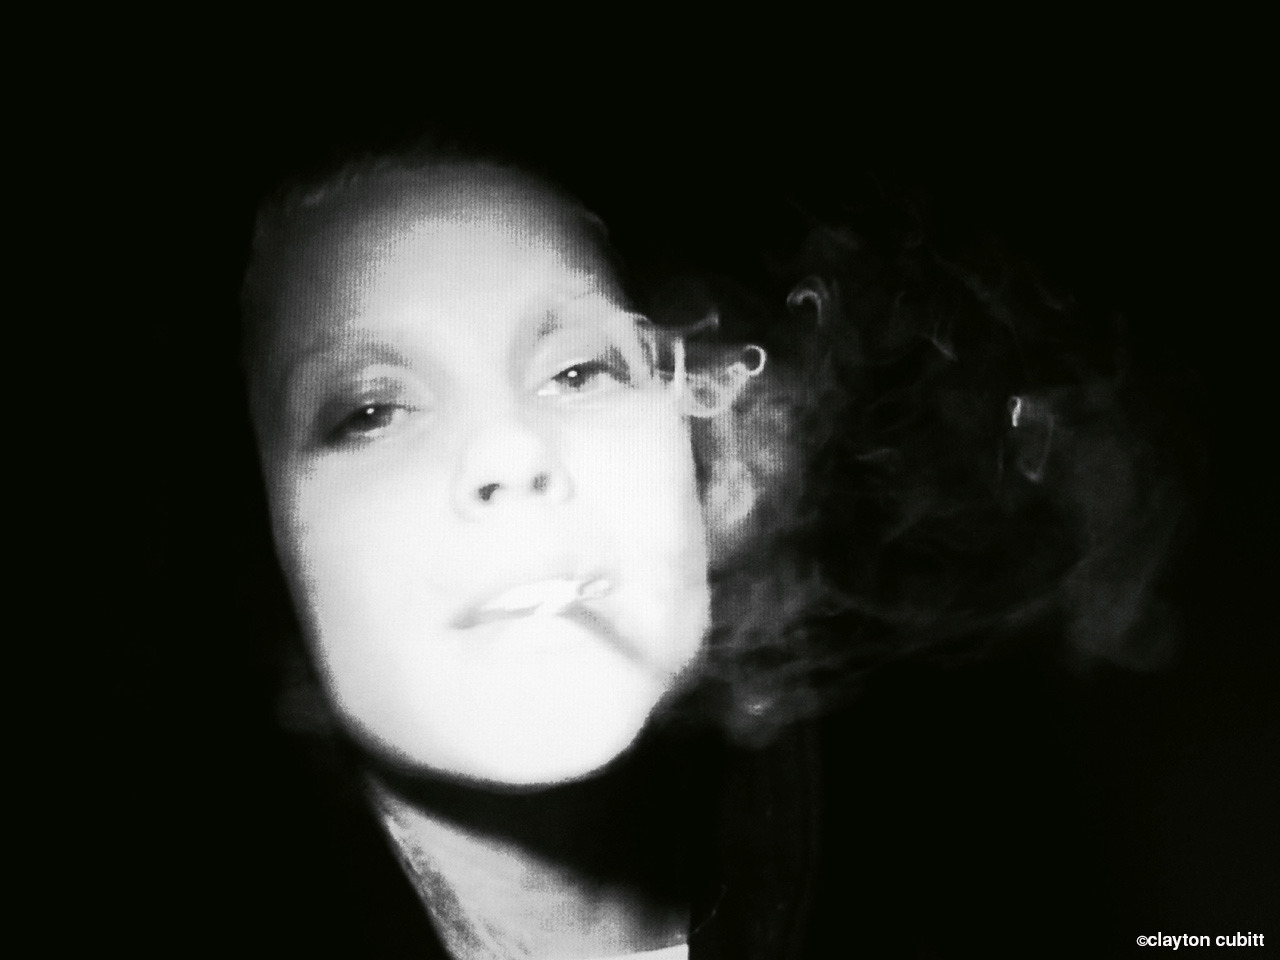 Yolandi smoking (video still)